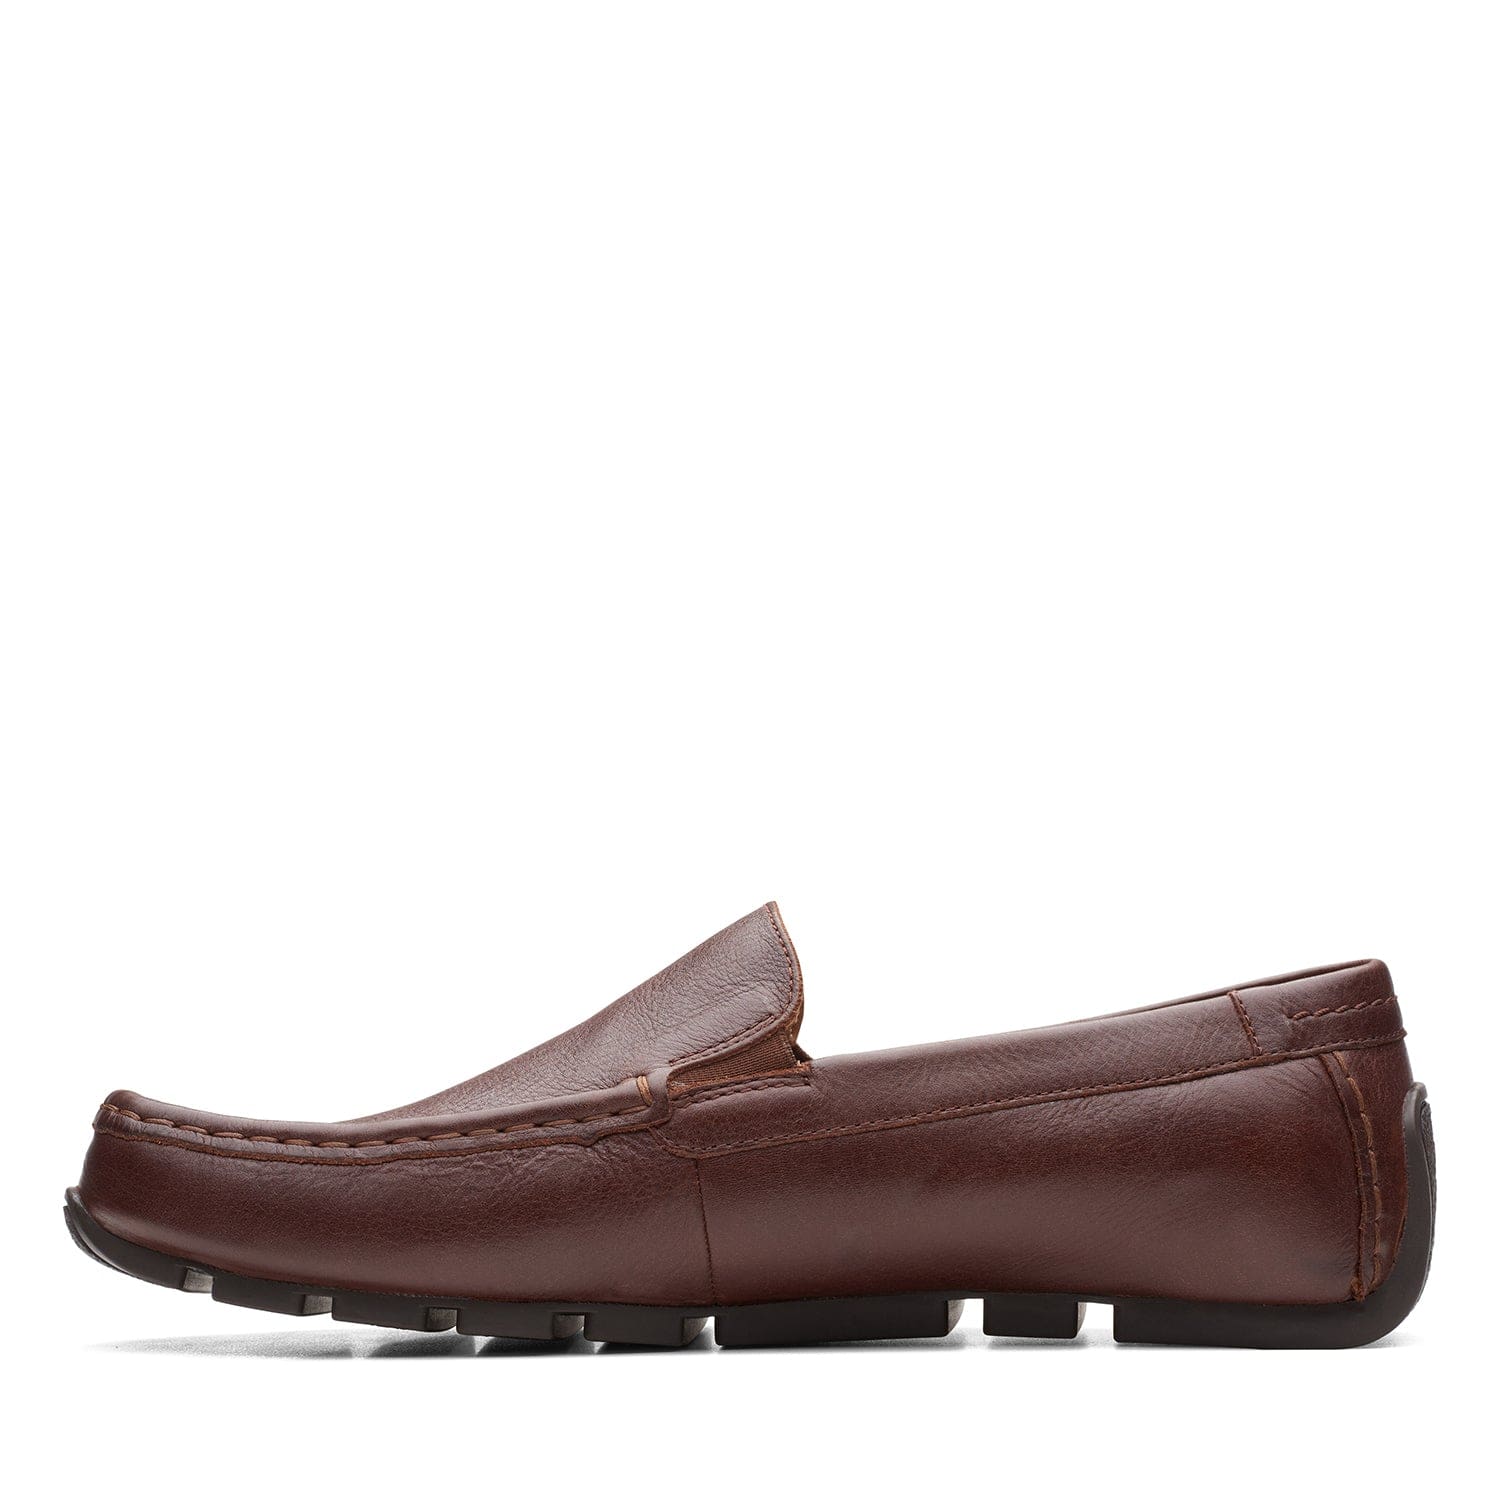 Clarks Oswick Plain - Shoes - Dark Tan Lea - 261666837 - G Width (Standard Fit)